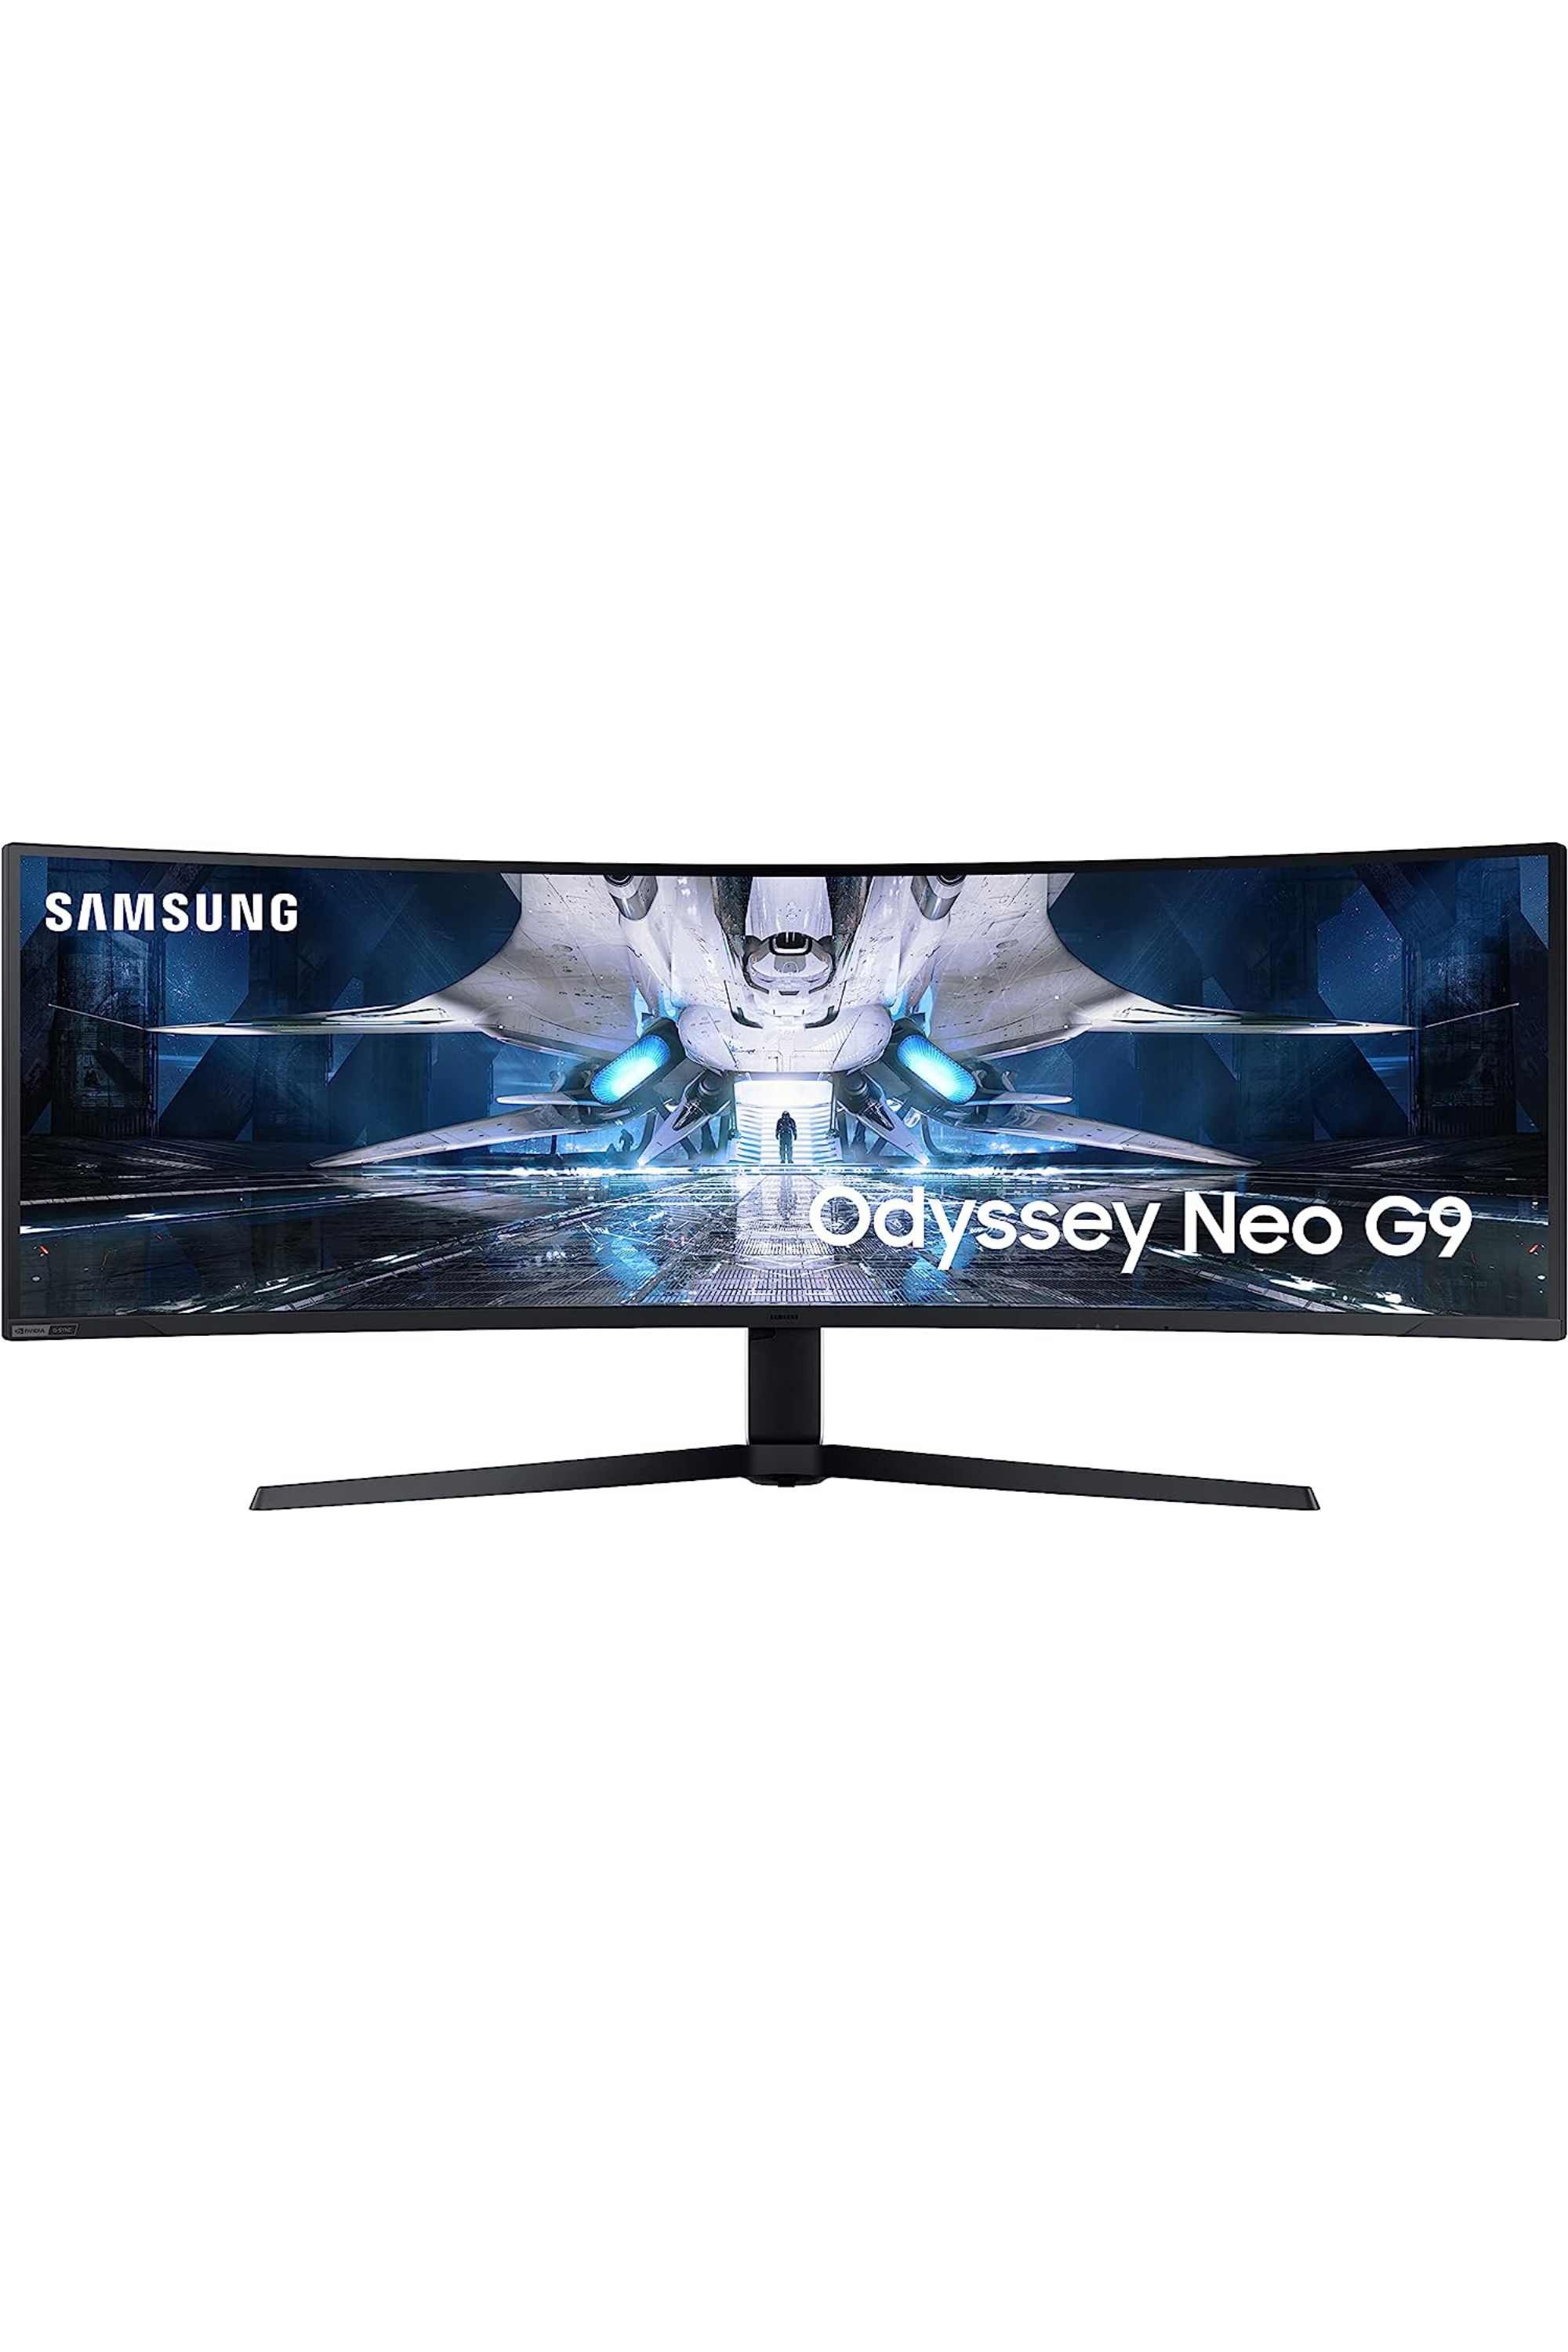 Samsung Odyssey Neo G9 gaming monitor